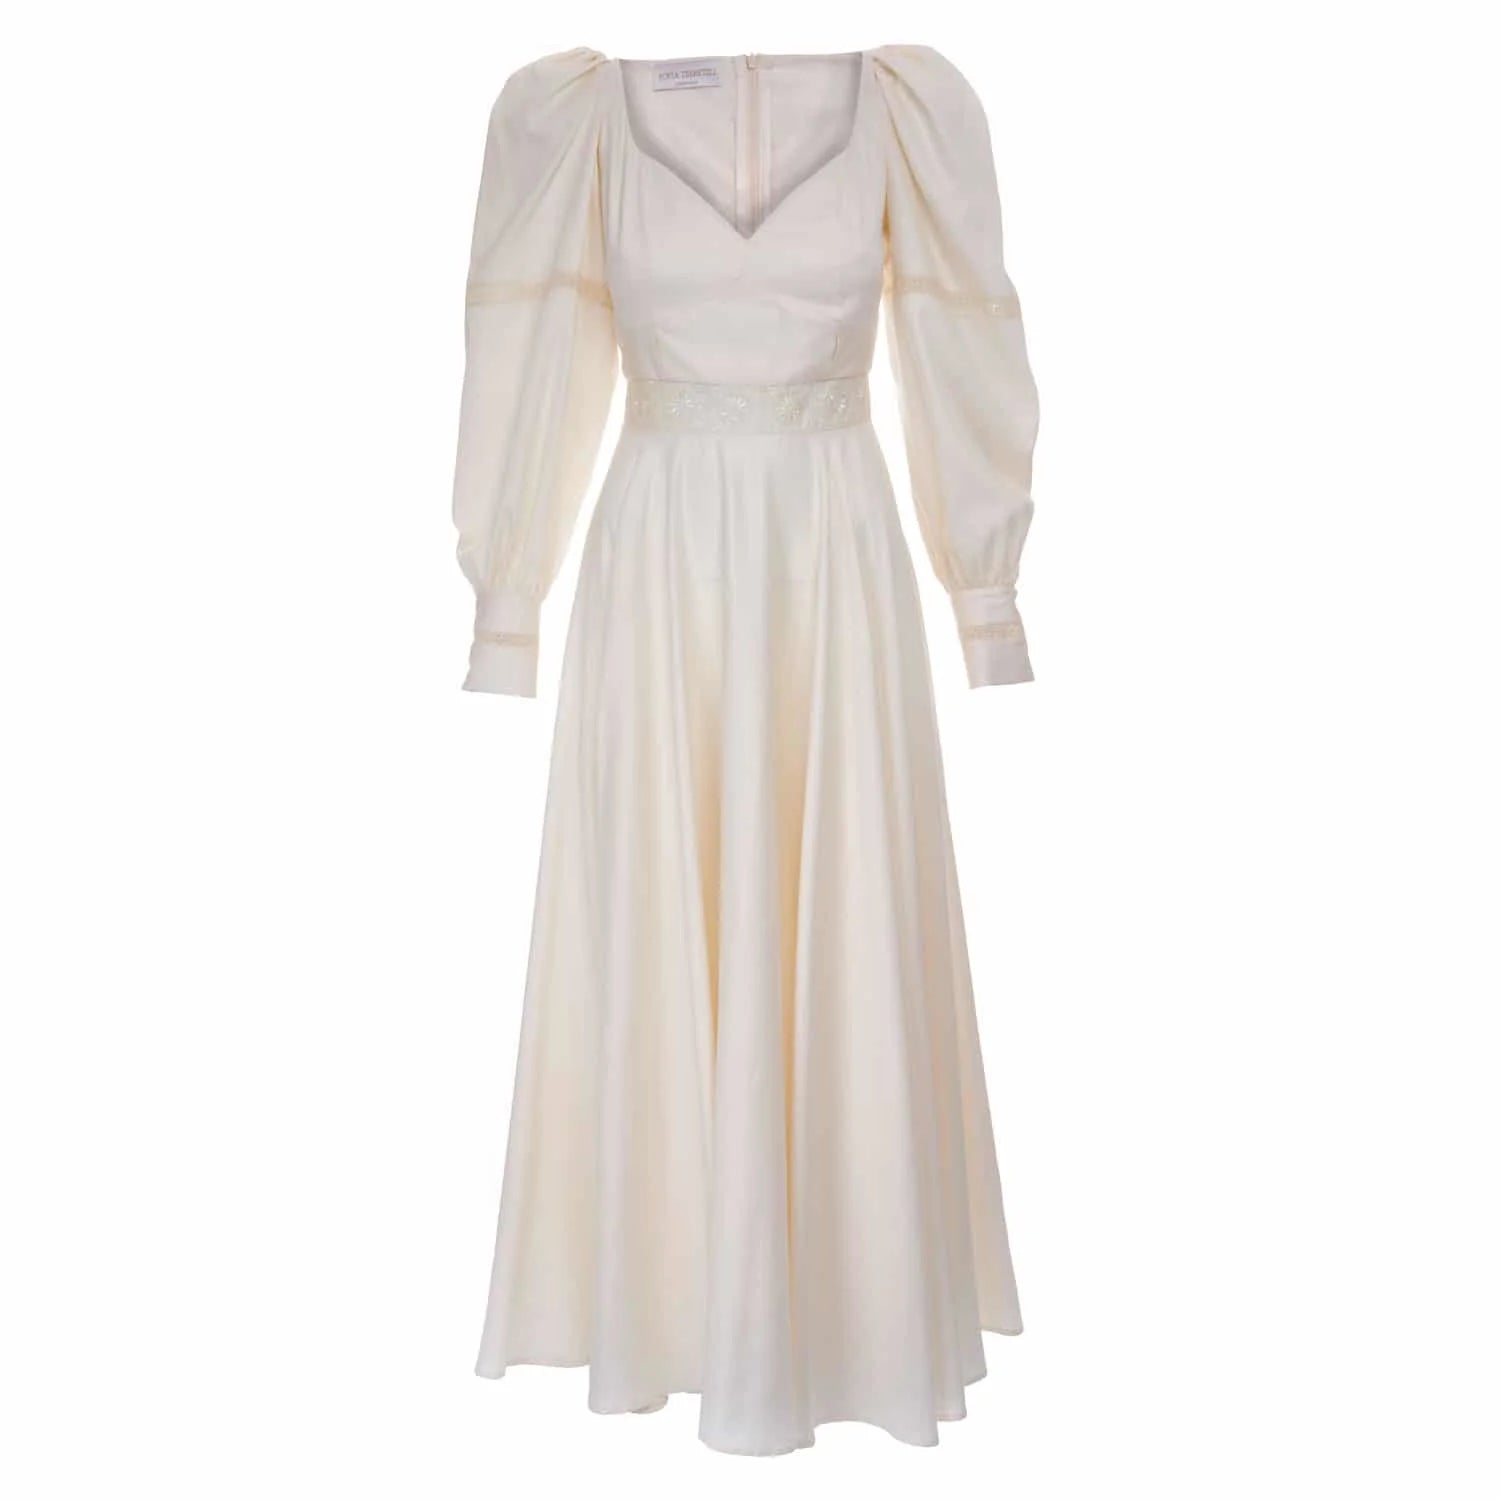 Cotton dress - Dress